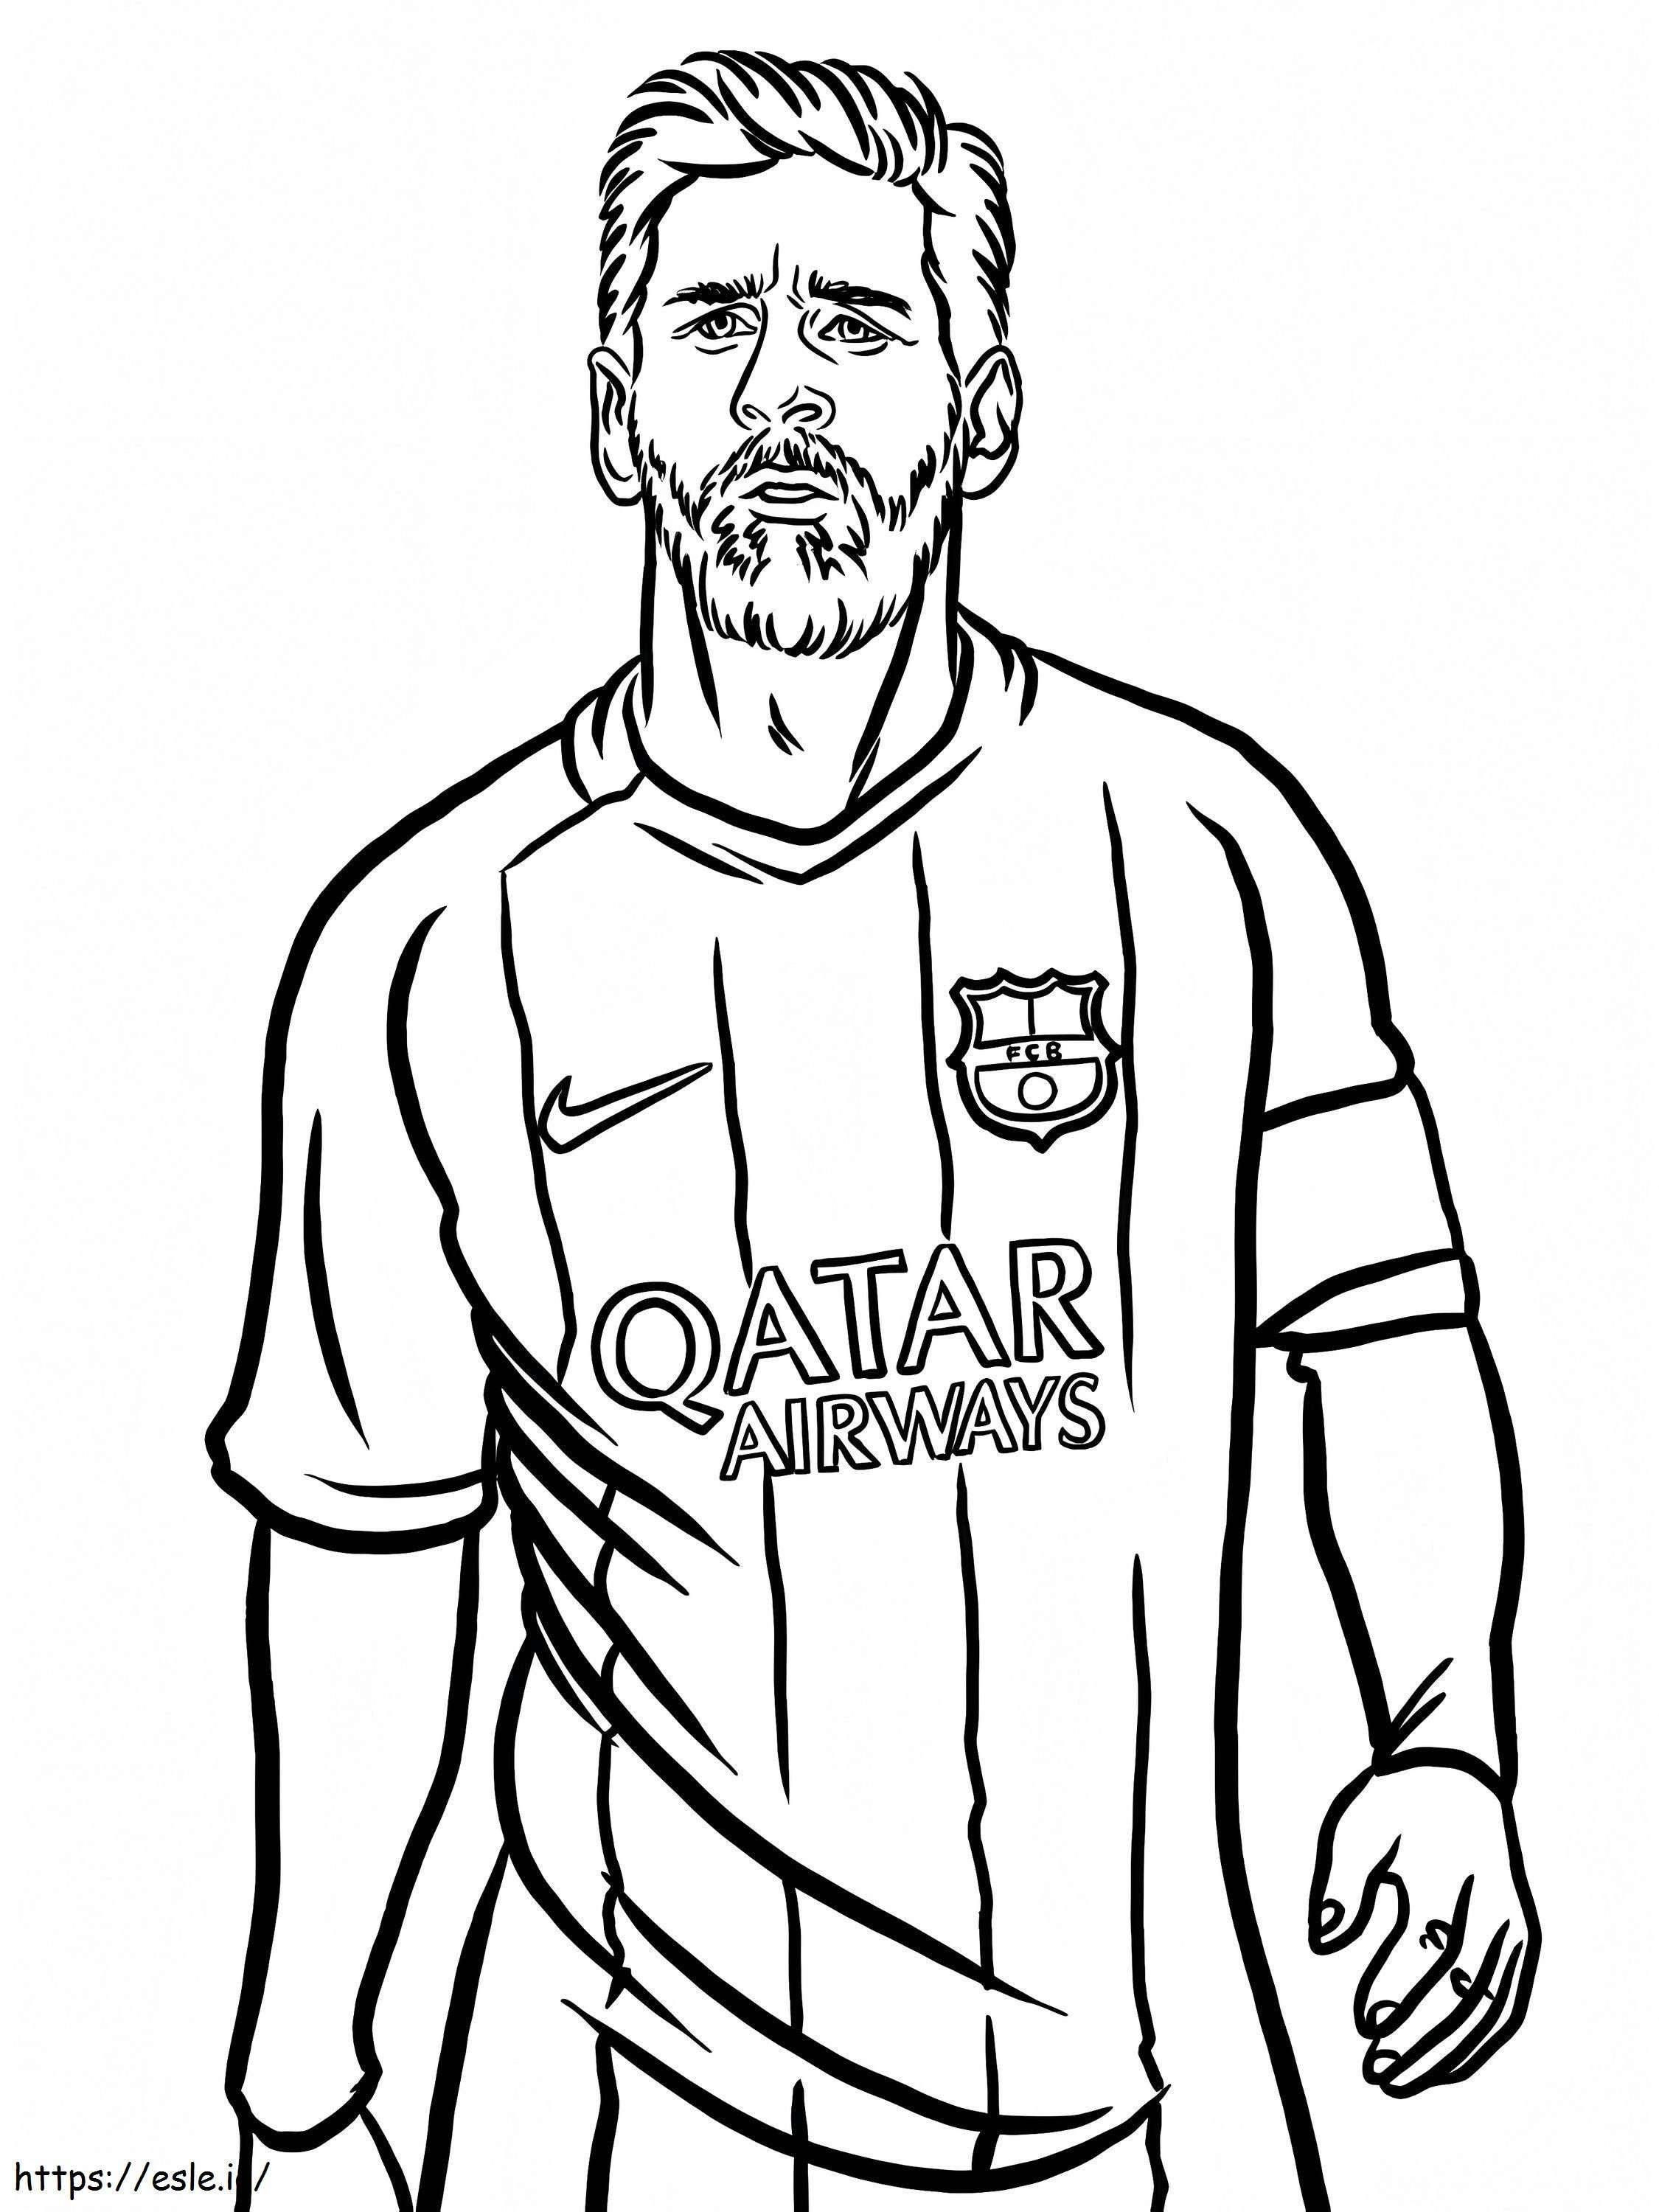 Lionel Messi3 boyama